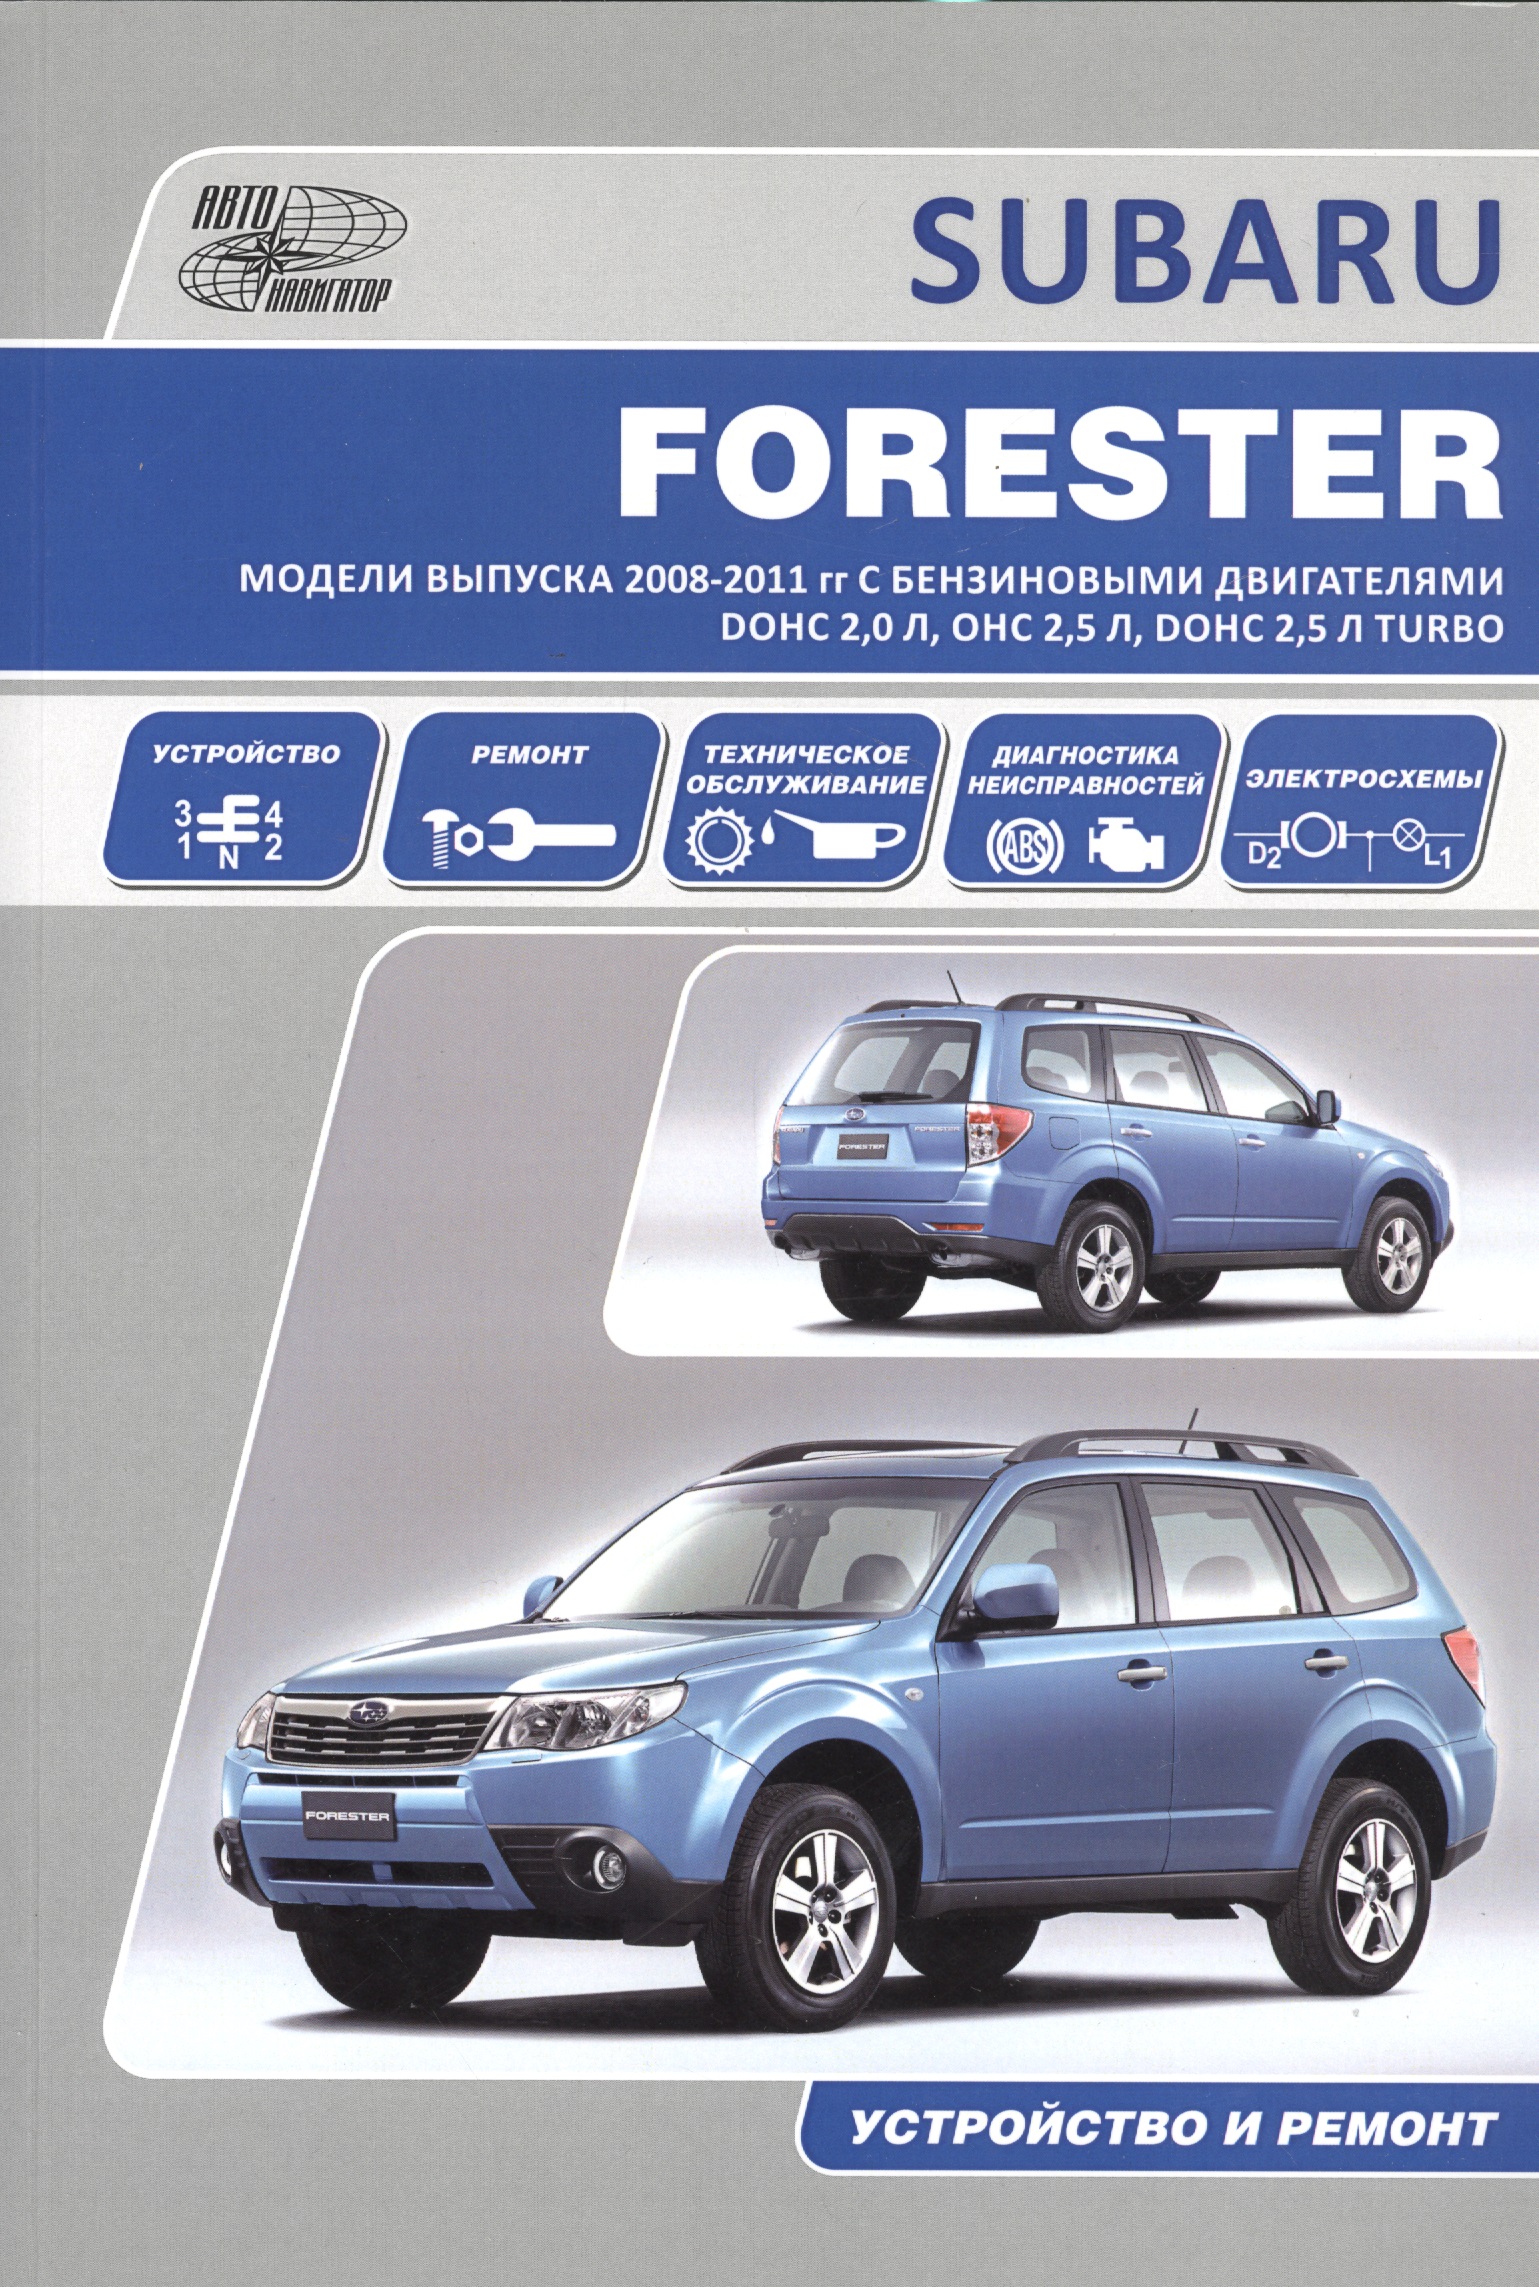 Subaru Forester Мод. вып. 2008-2011 гг. с бенз. двигат. DOHC 2,0 л. (м) subaru forester мод вып 2008 2011 гг с бенз двигат dohc 2 0 л м